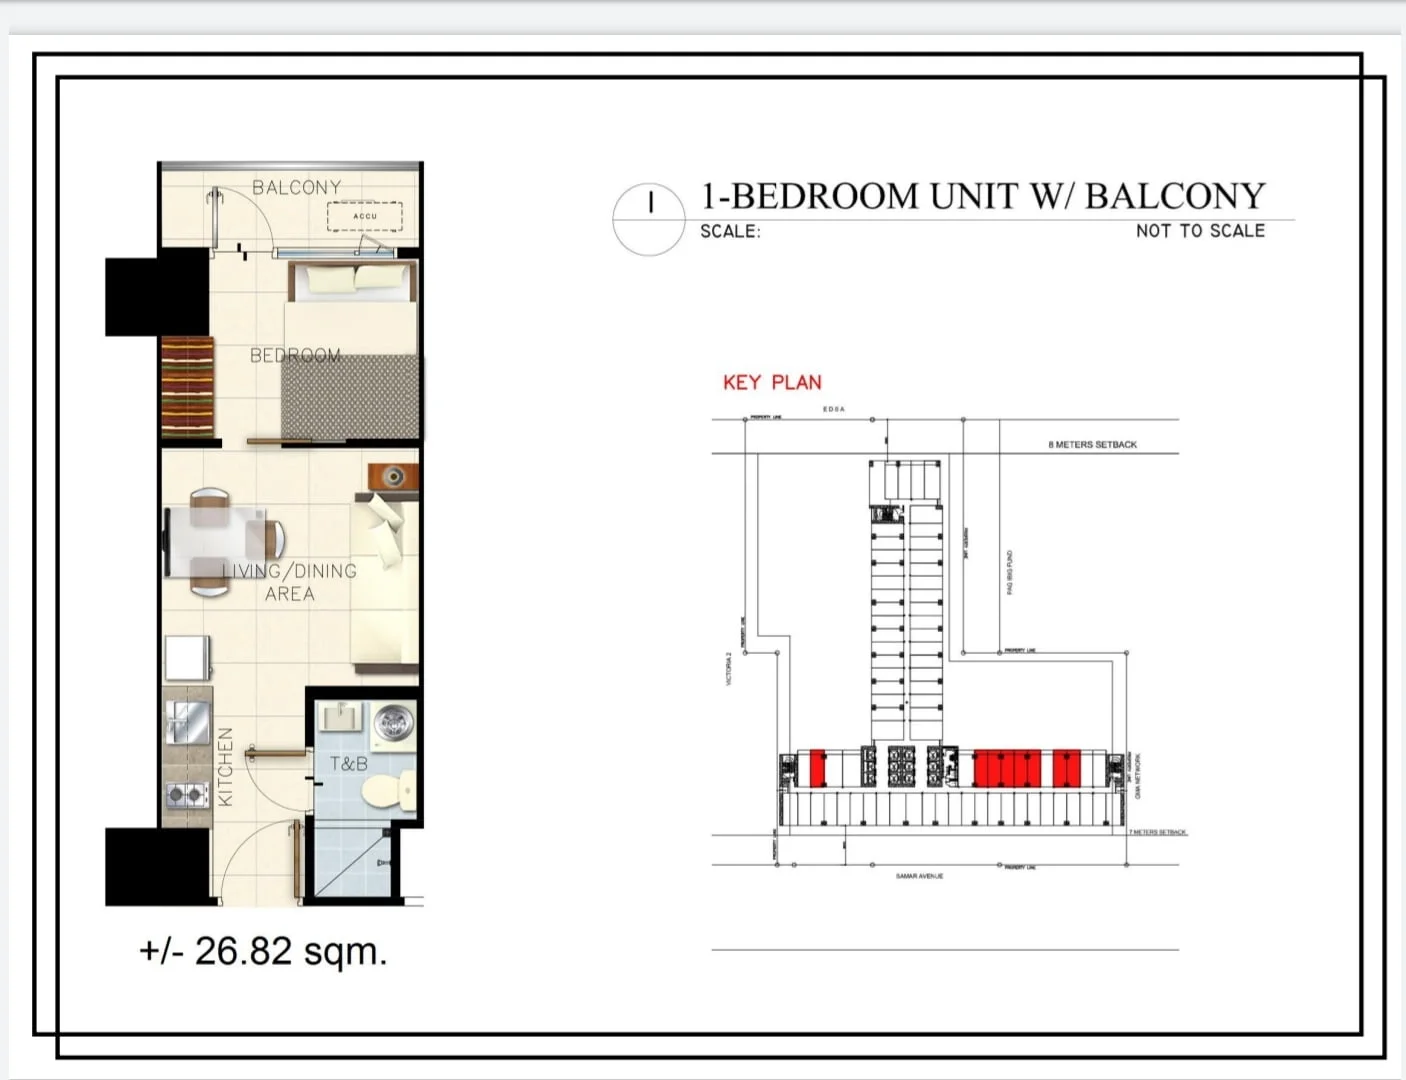 1 bedroom unit balcony